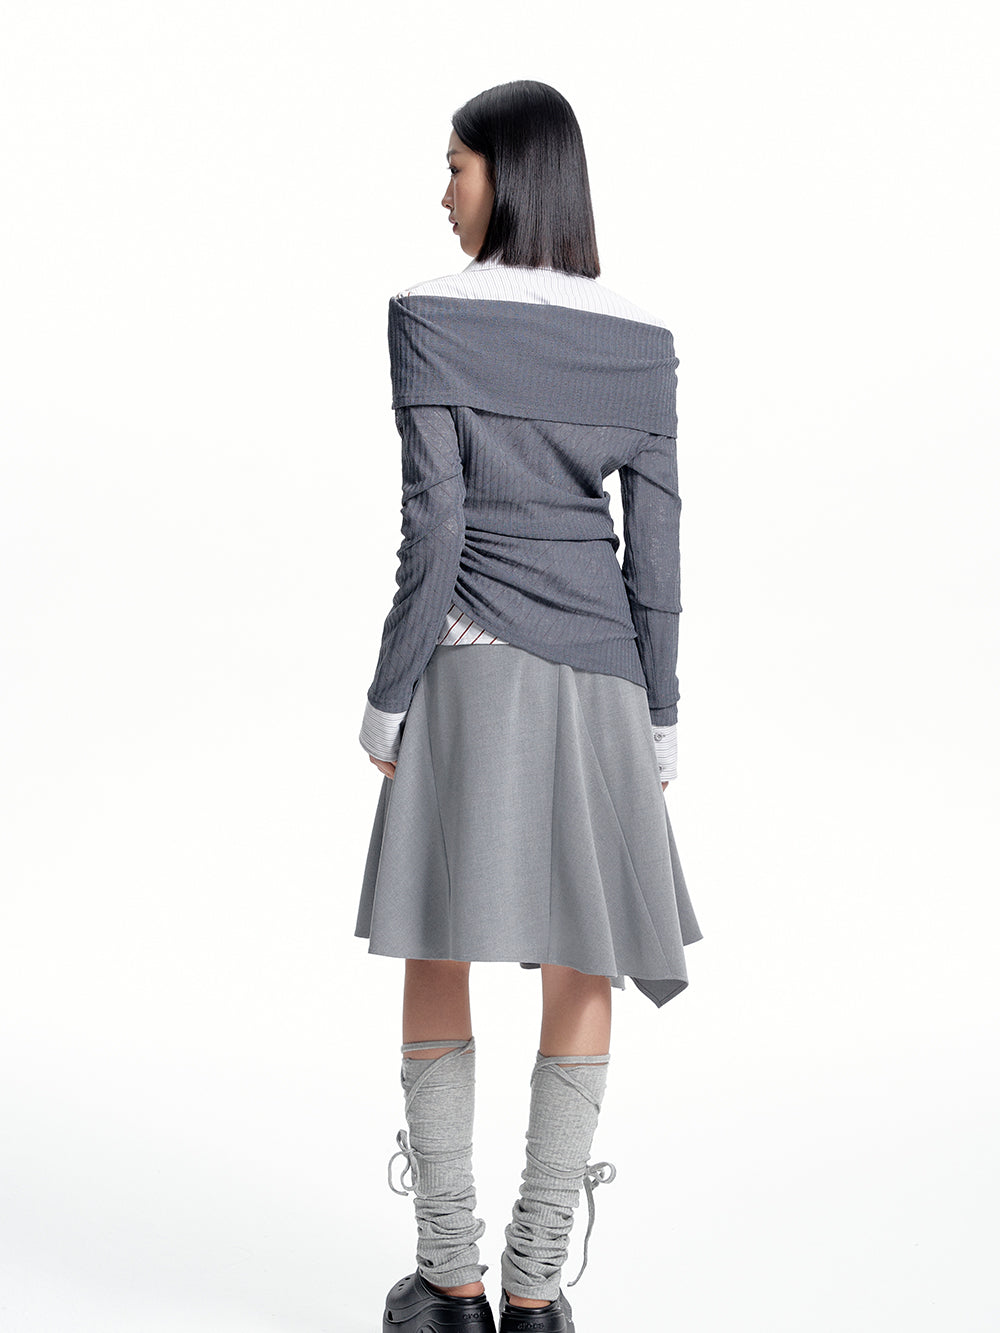 MUKTANK x WESAME Off-shoulder Long Sleeve Drawstring Dark Gray Knit Cardigan Women's Top